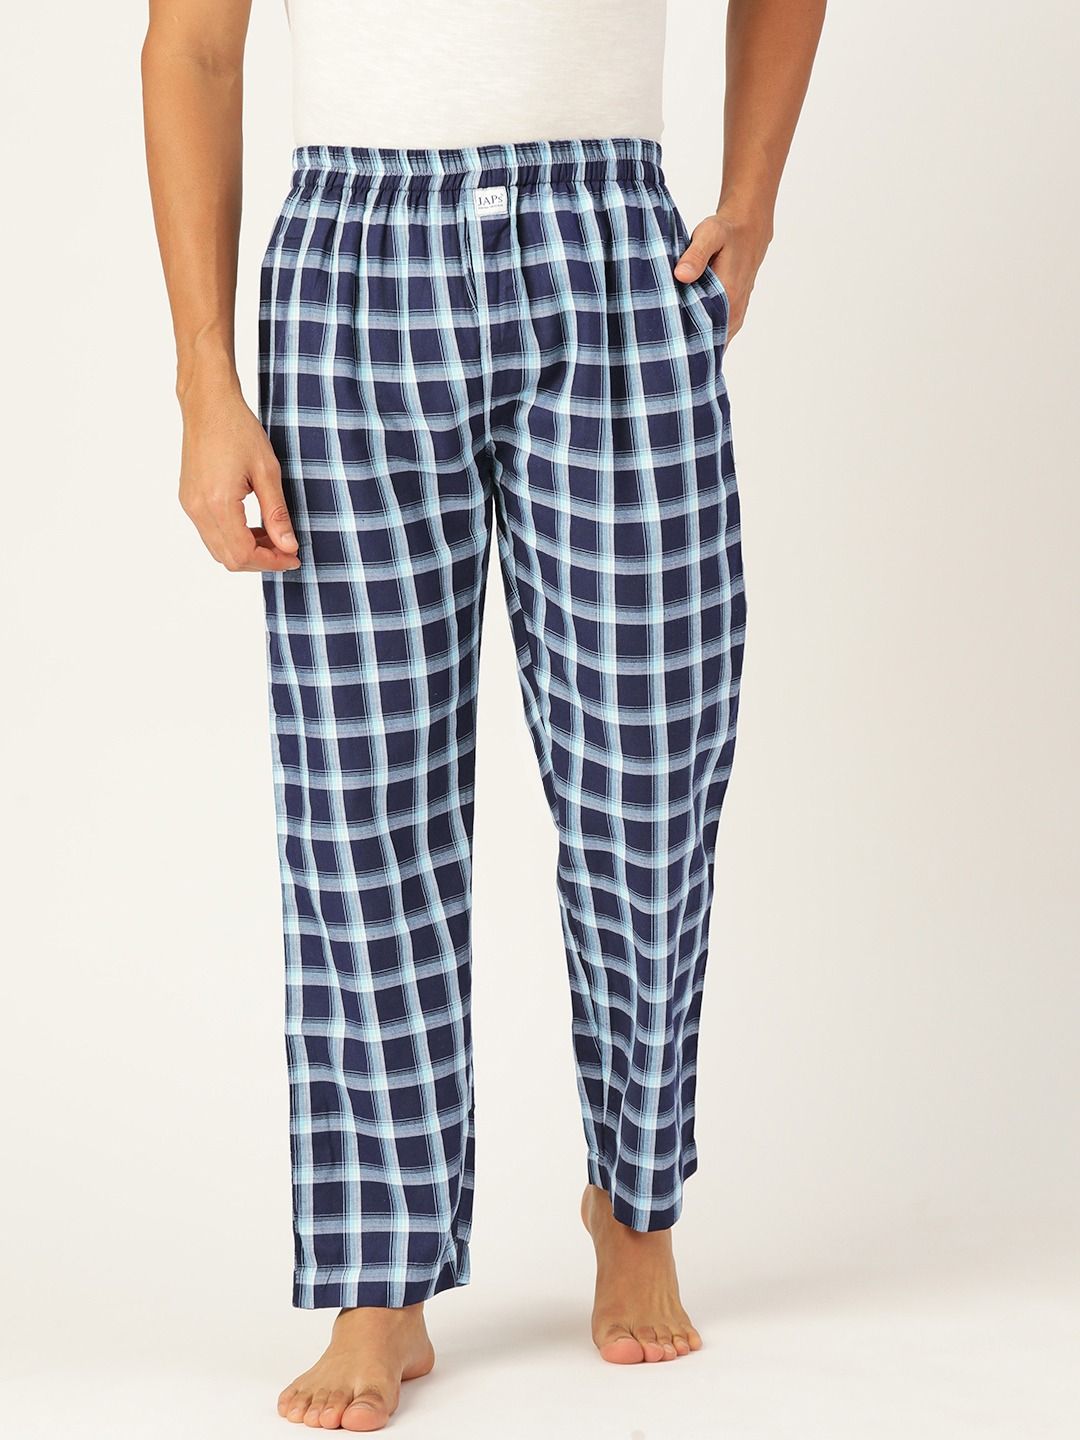 Cotton Pajamas: Buy Cotton Pyjamas for Mens Online in India